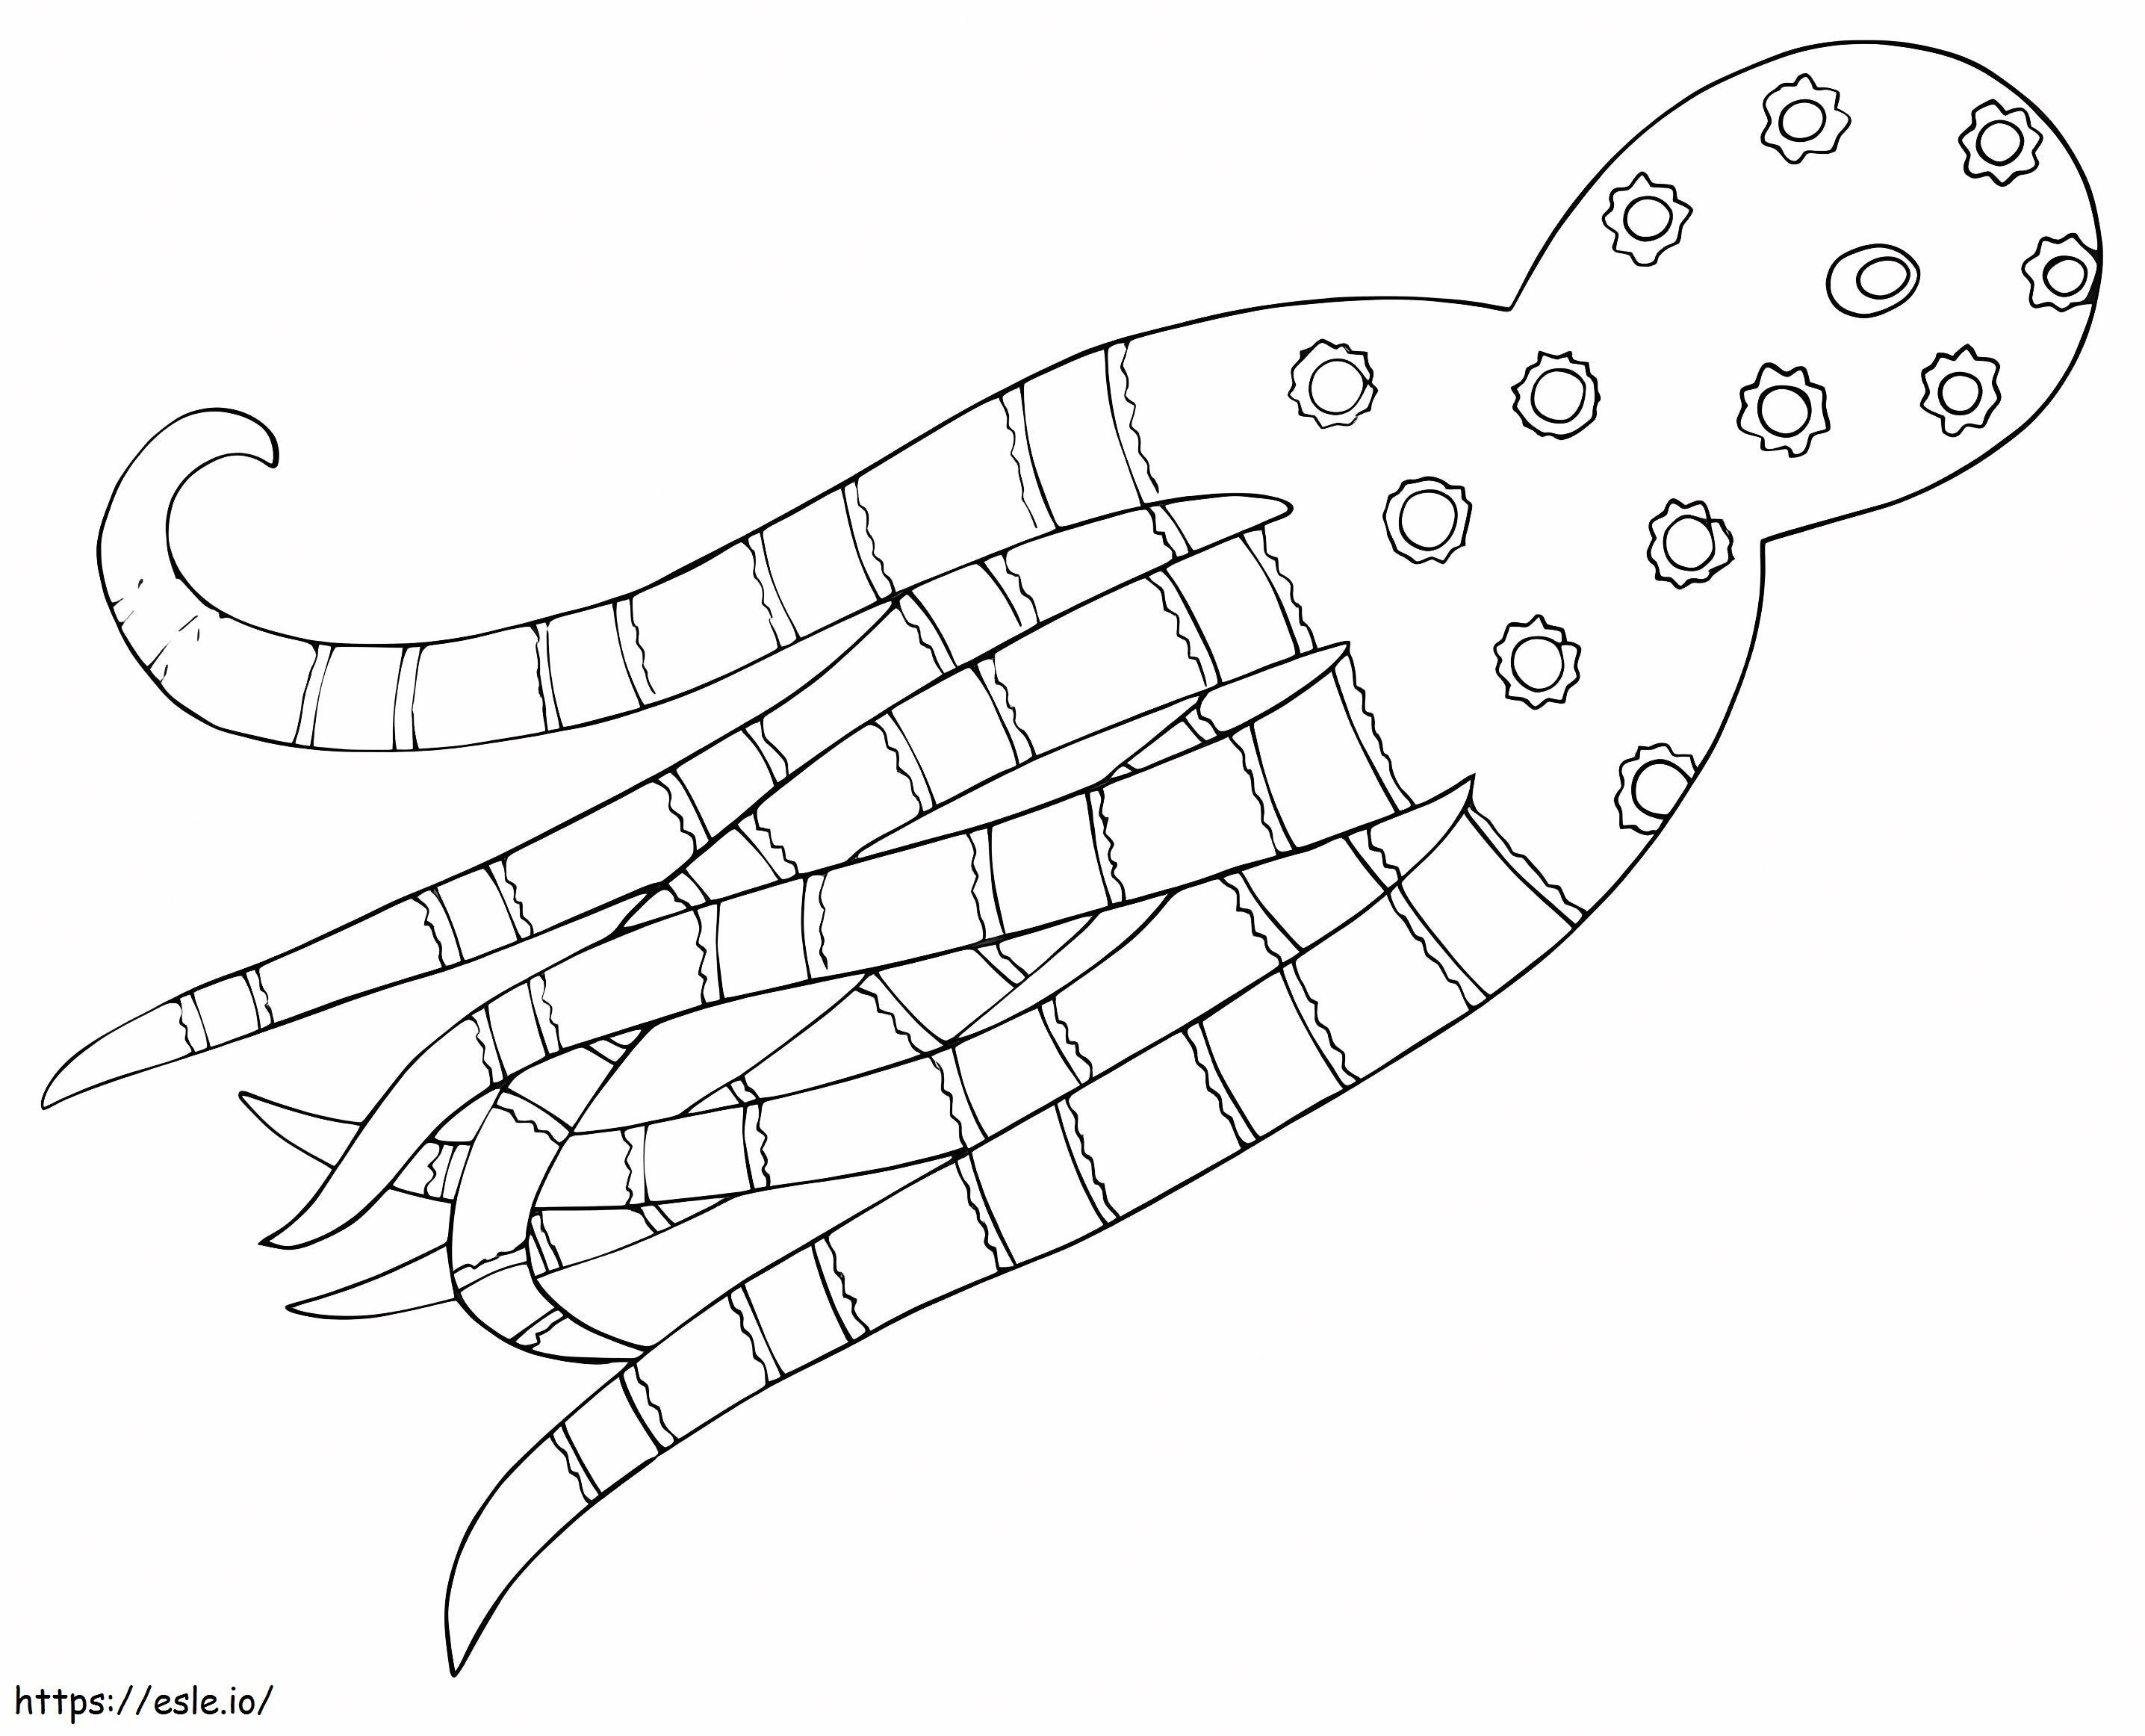 Oktopus Alebrijes ausmalbilder